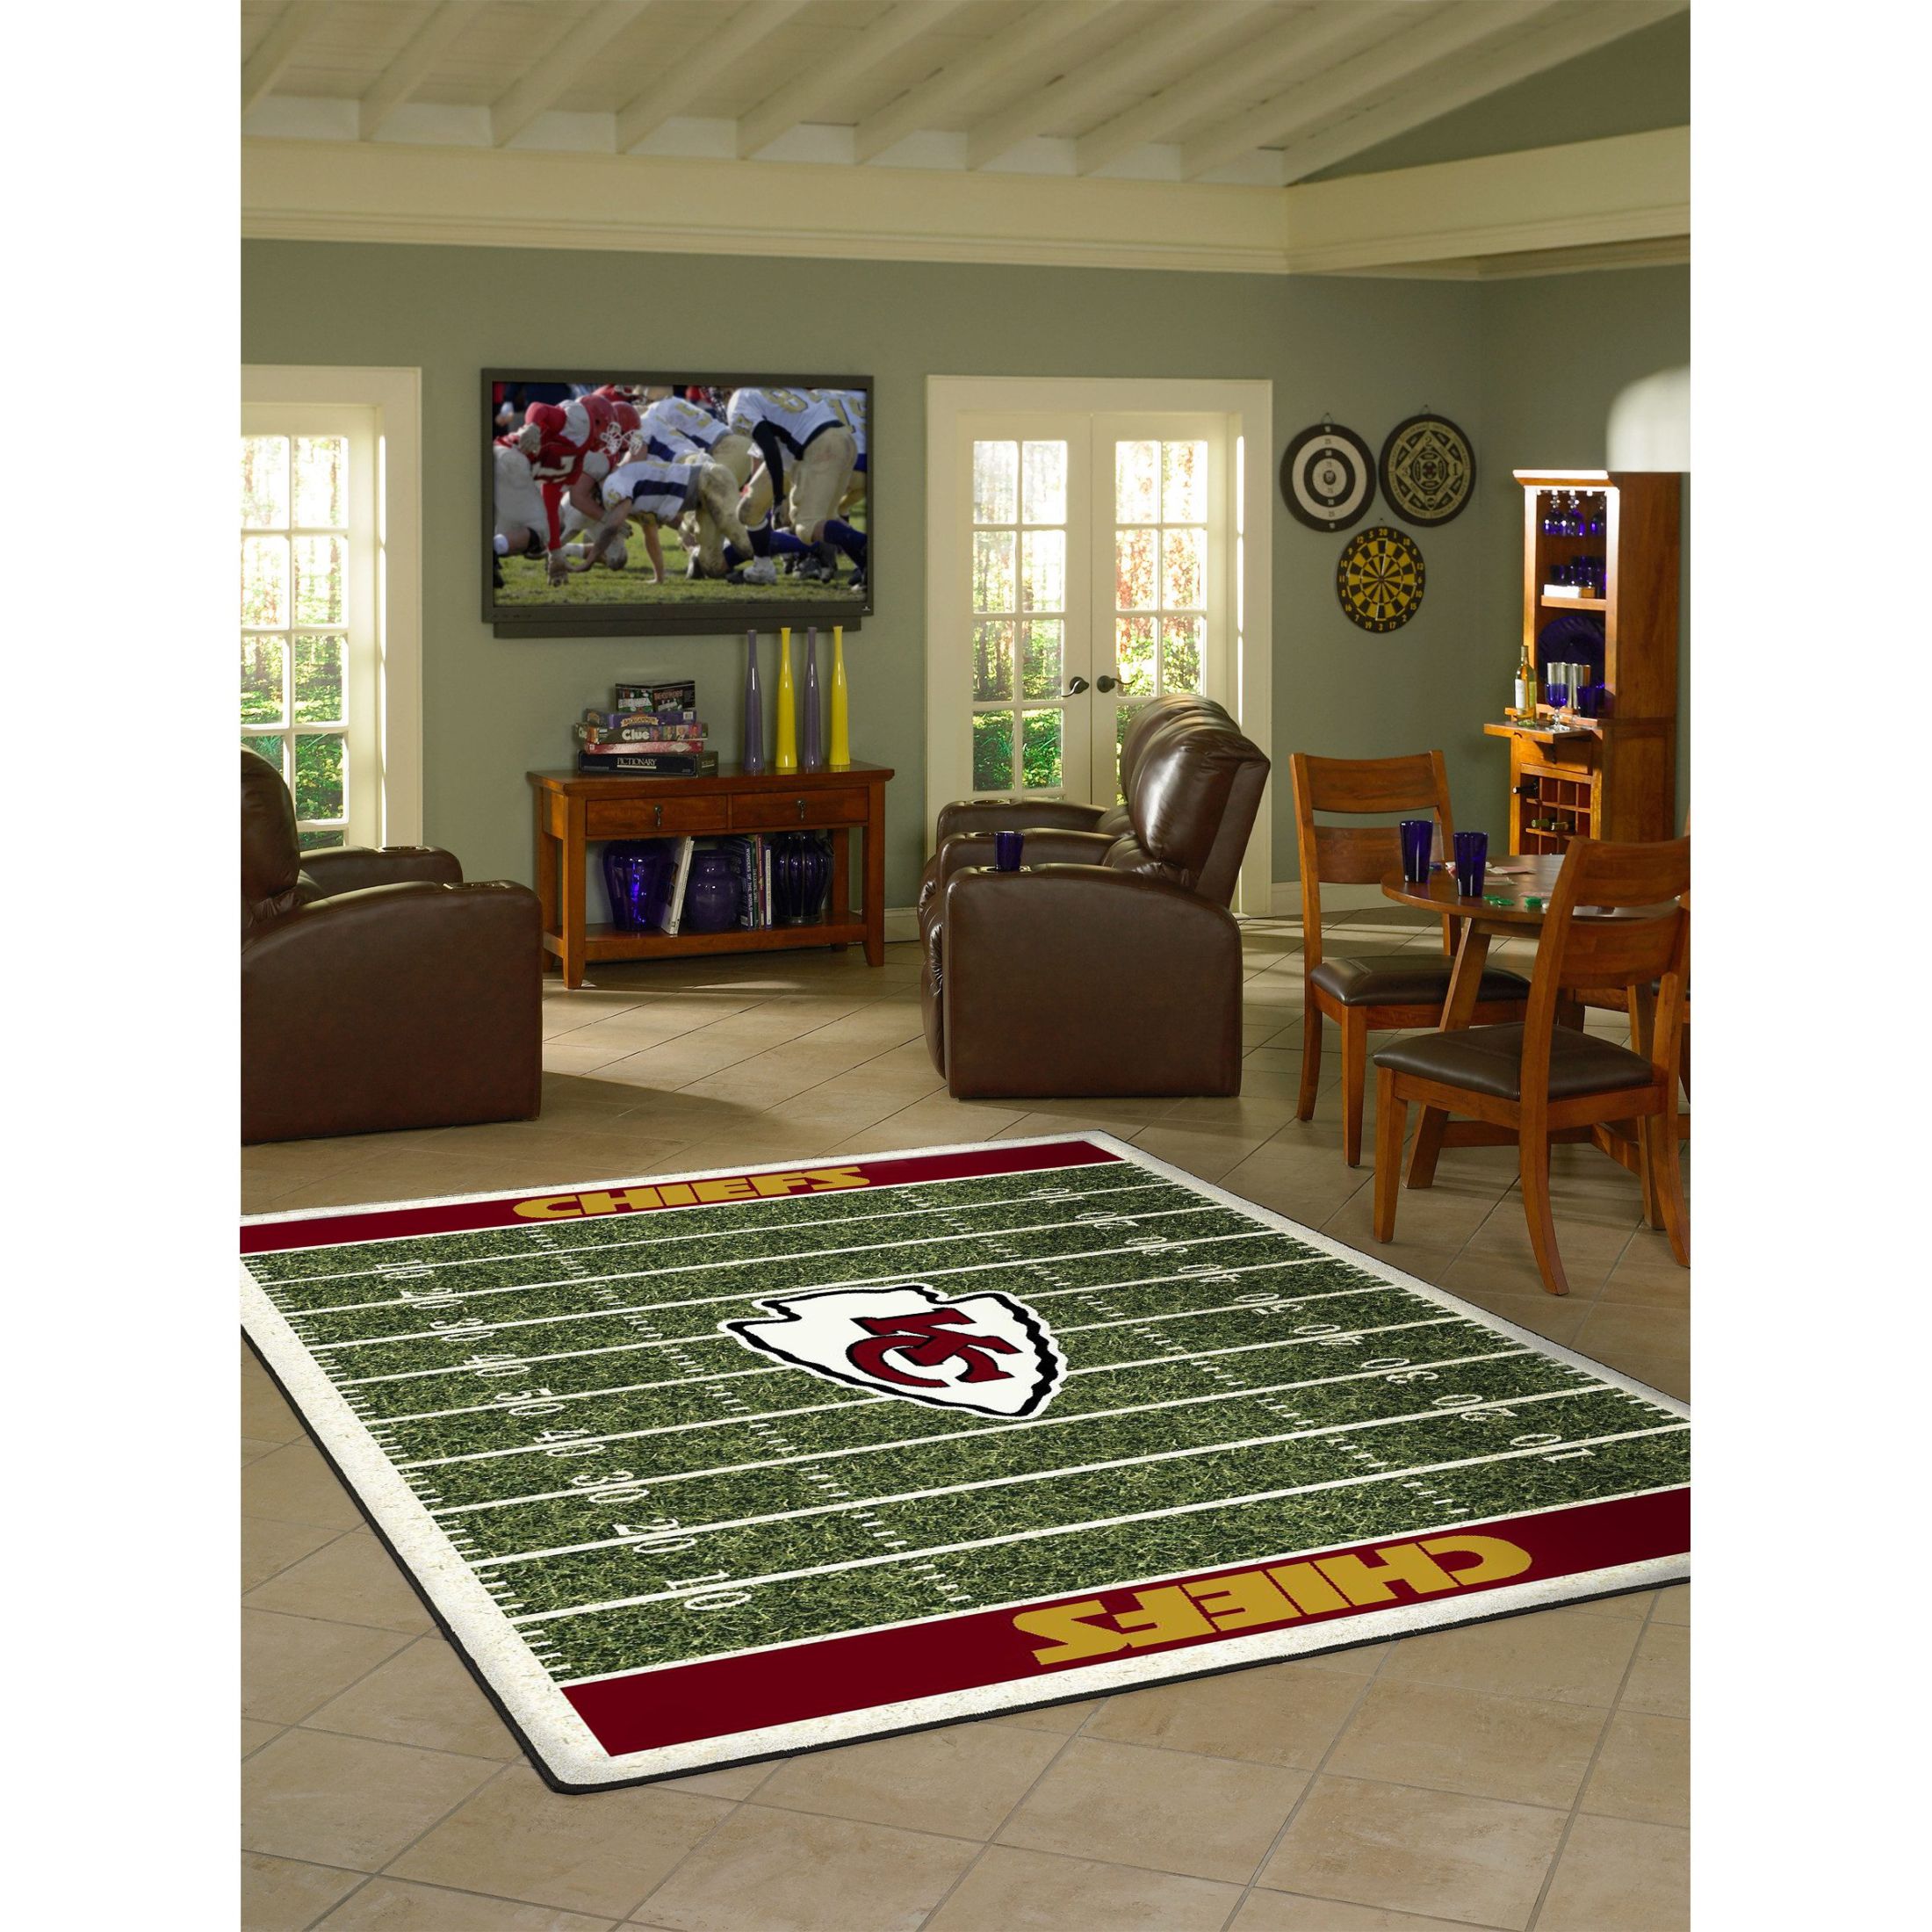 Kansas City Chiefs football shaped rug